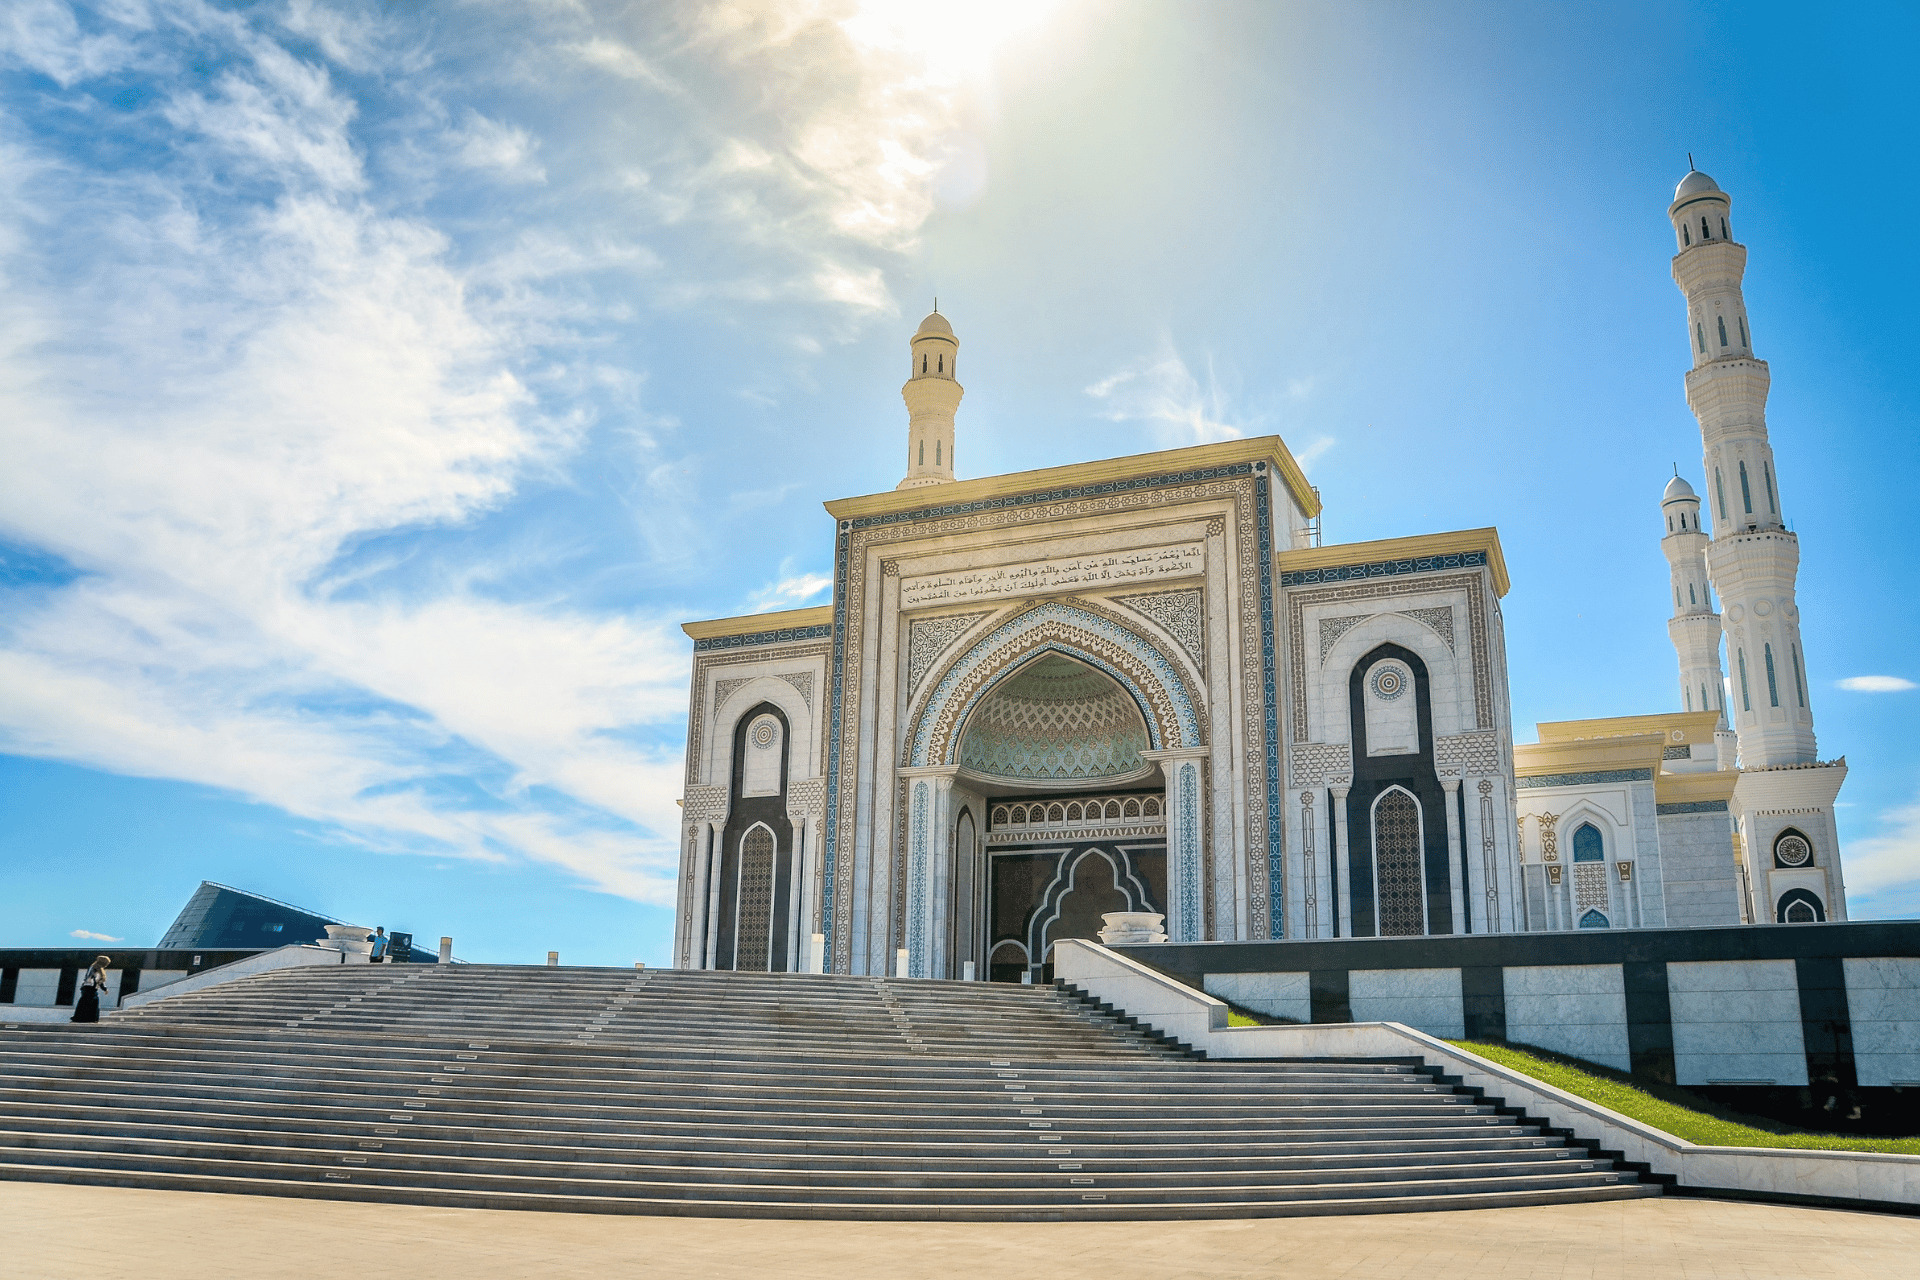 The blue mosque of Kazakhstan